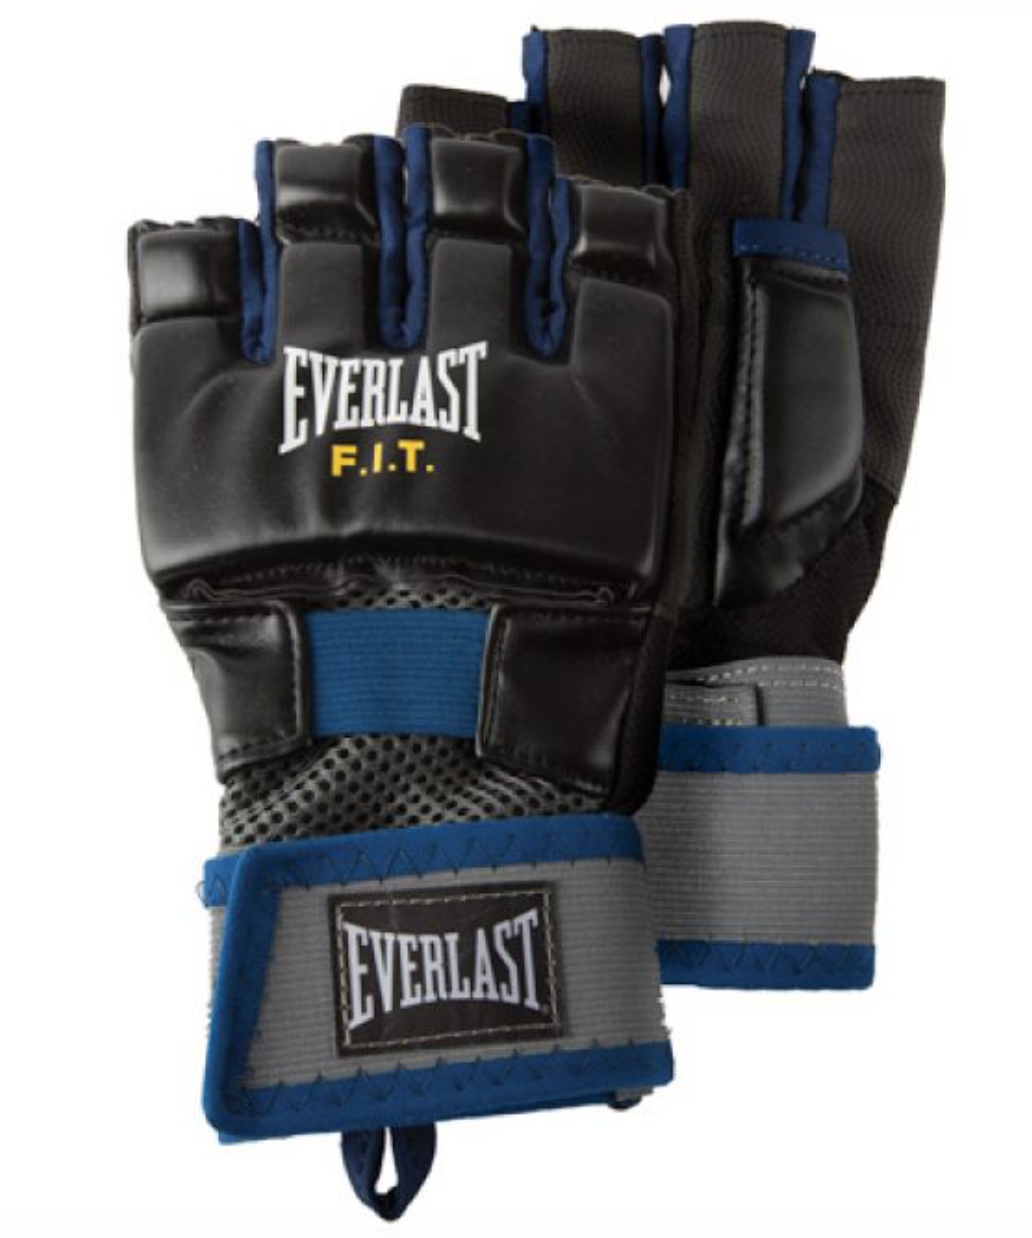 Men's Universal FIT Gloves